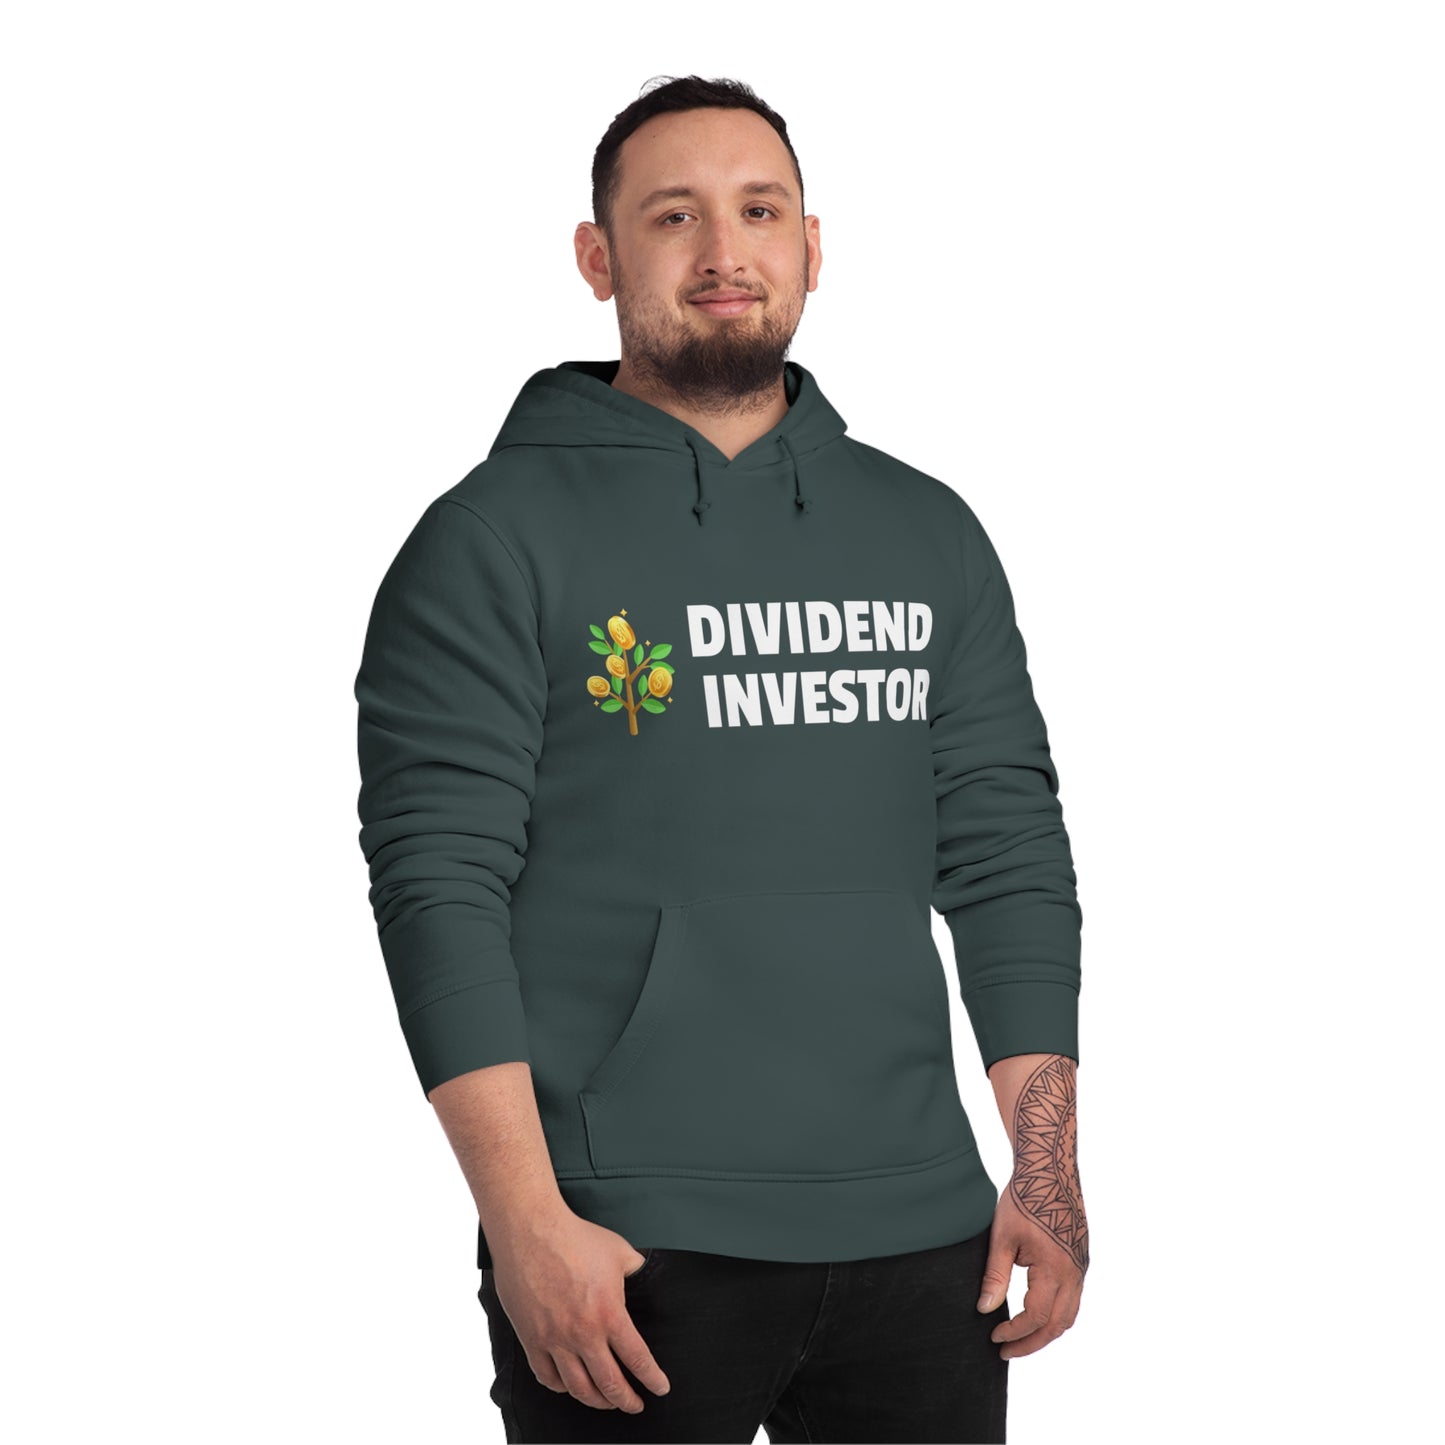 Dividend investor Huppari